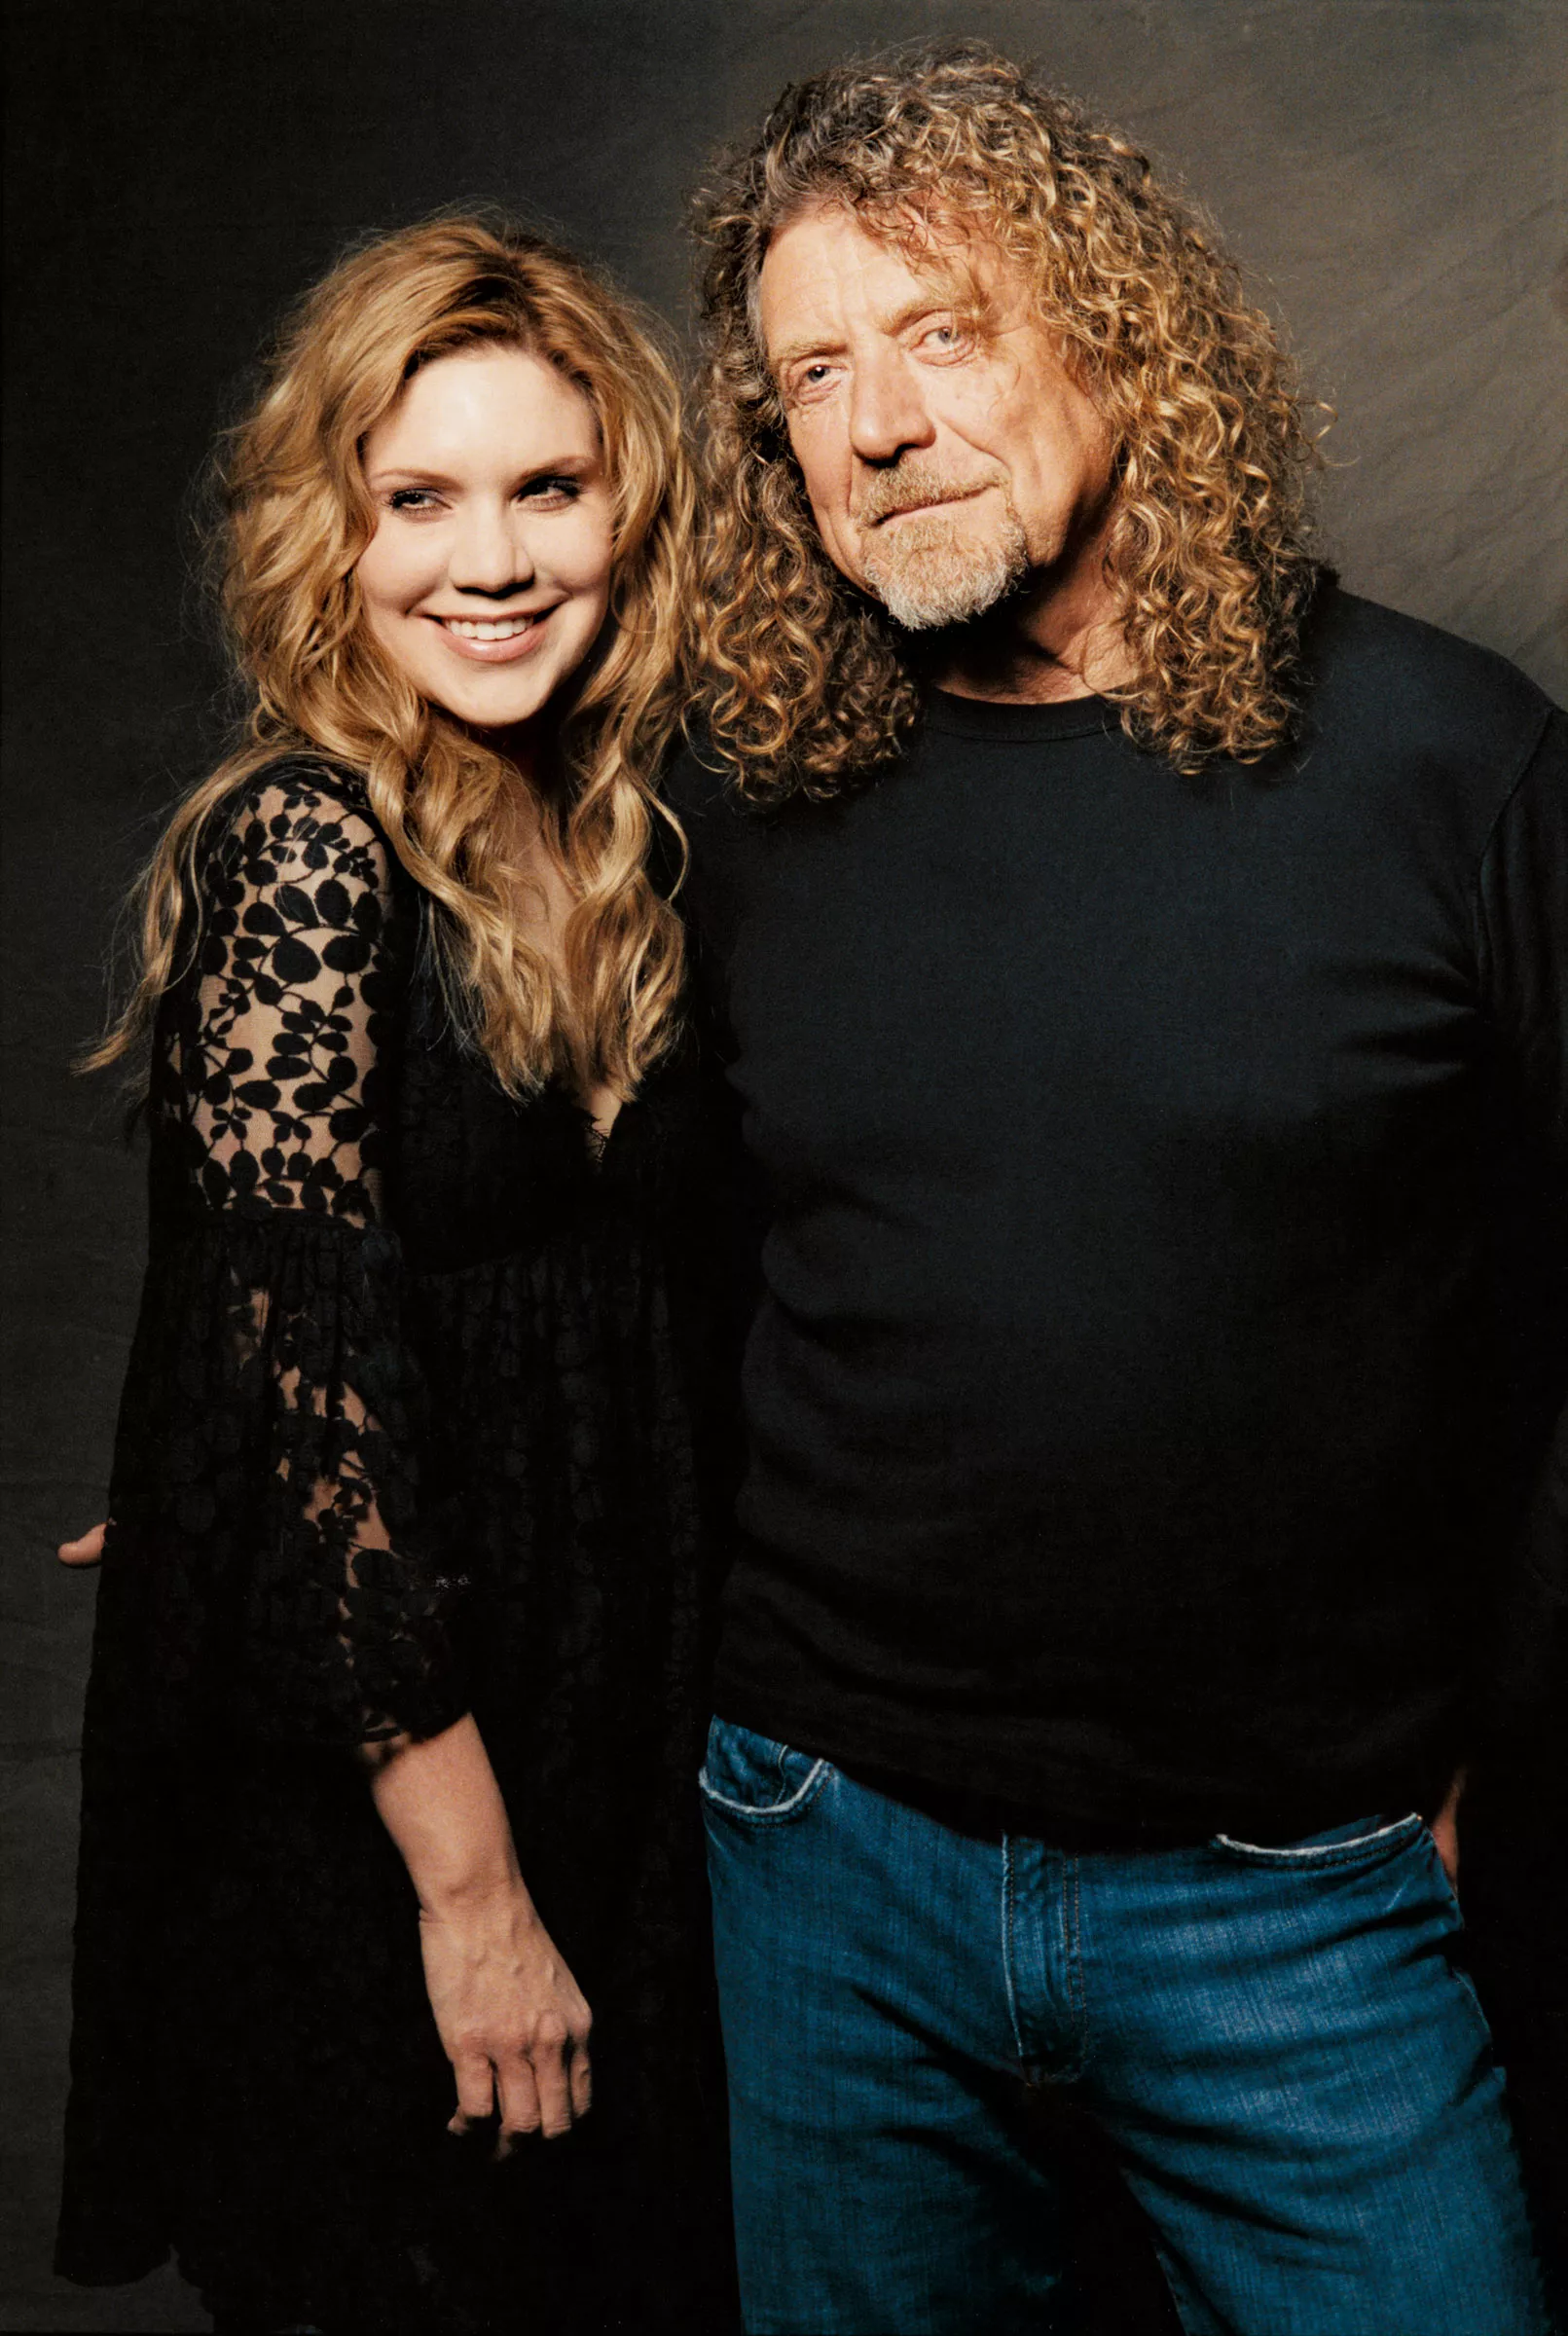 Robert Plant indspiller nyt album med Alison Krauss